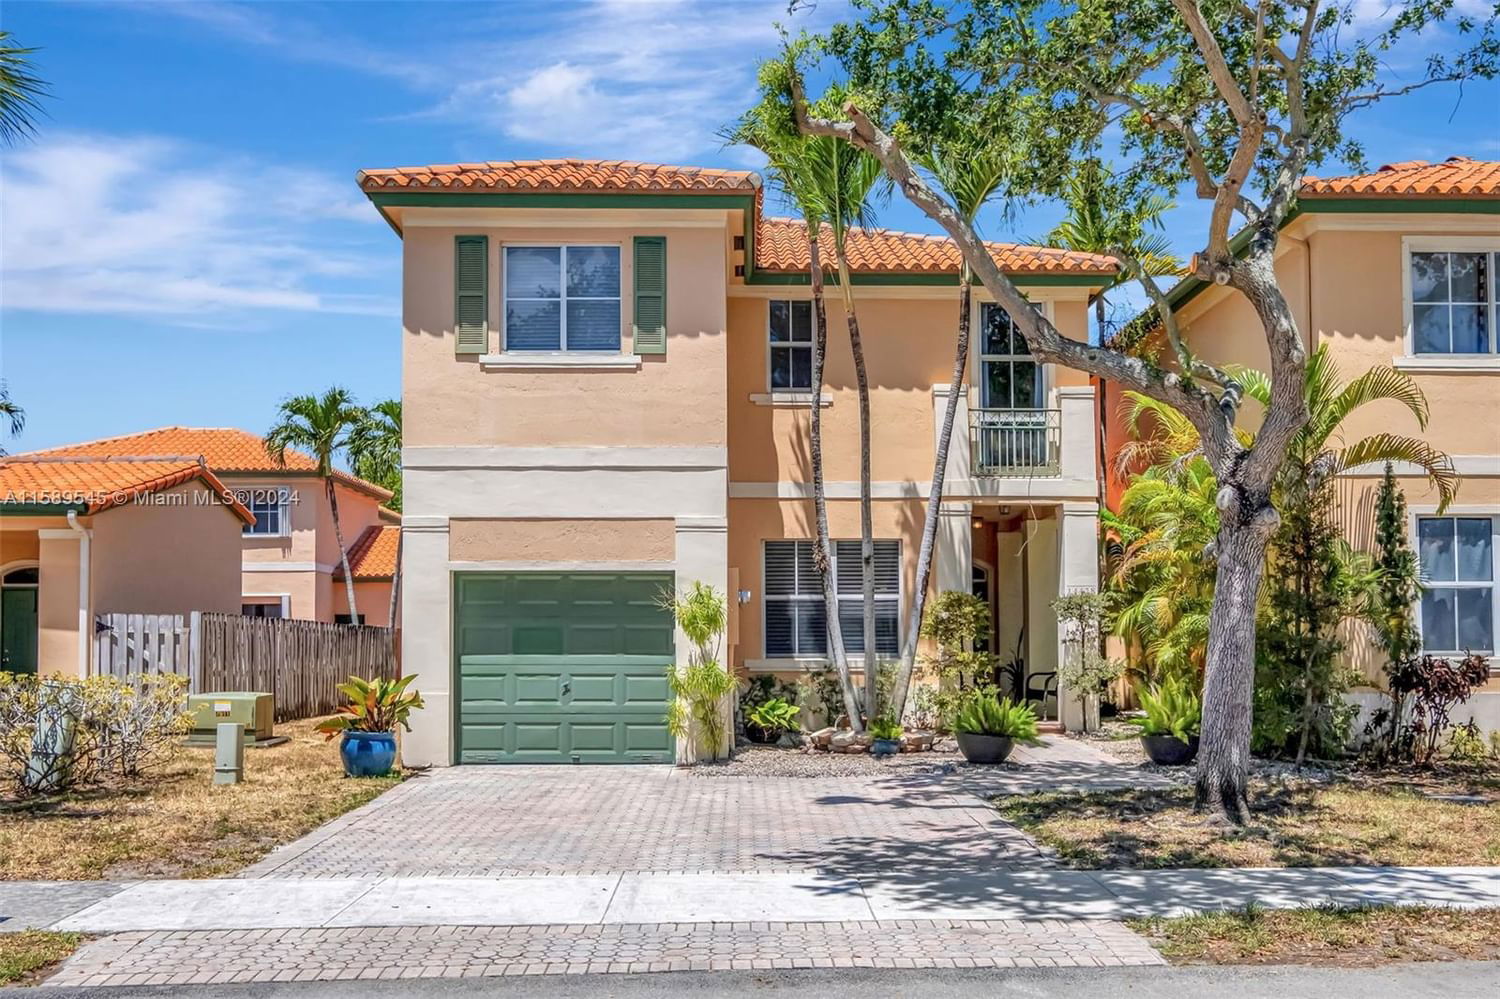 Real estate property located at 14428 83rd Pl, Miami-Dade County, ANCHORAGE AT MIAMI LAKES, Miami Lakes, FL